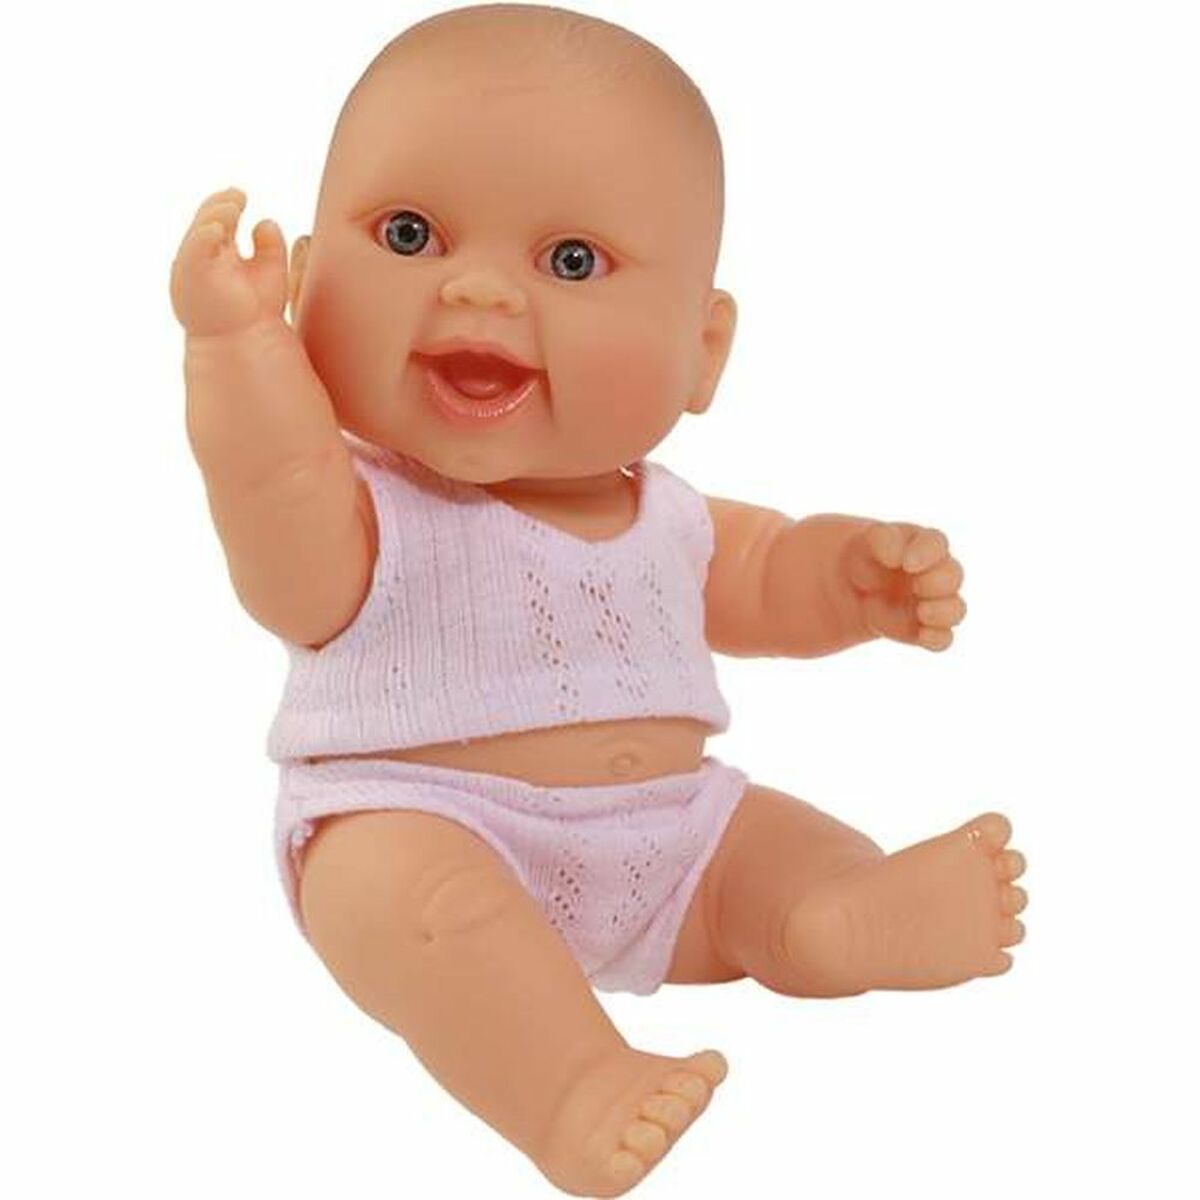 Baby doll Paola Reina (21 cm)